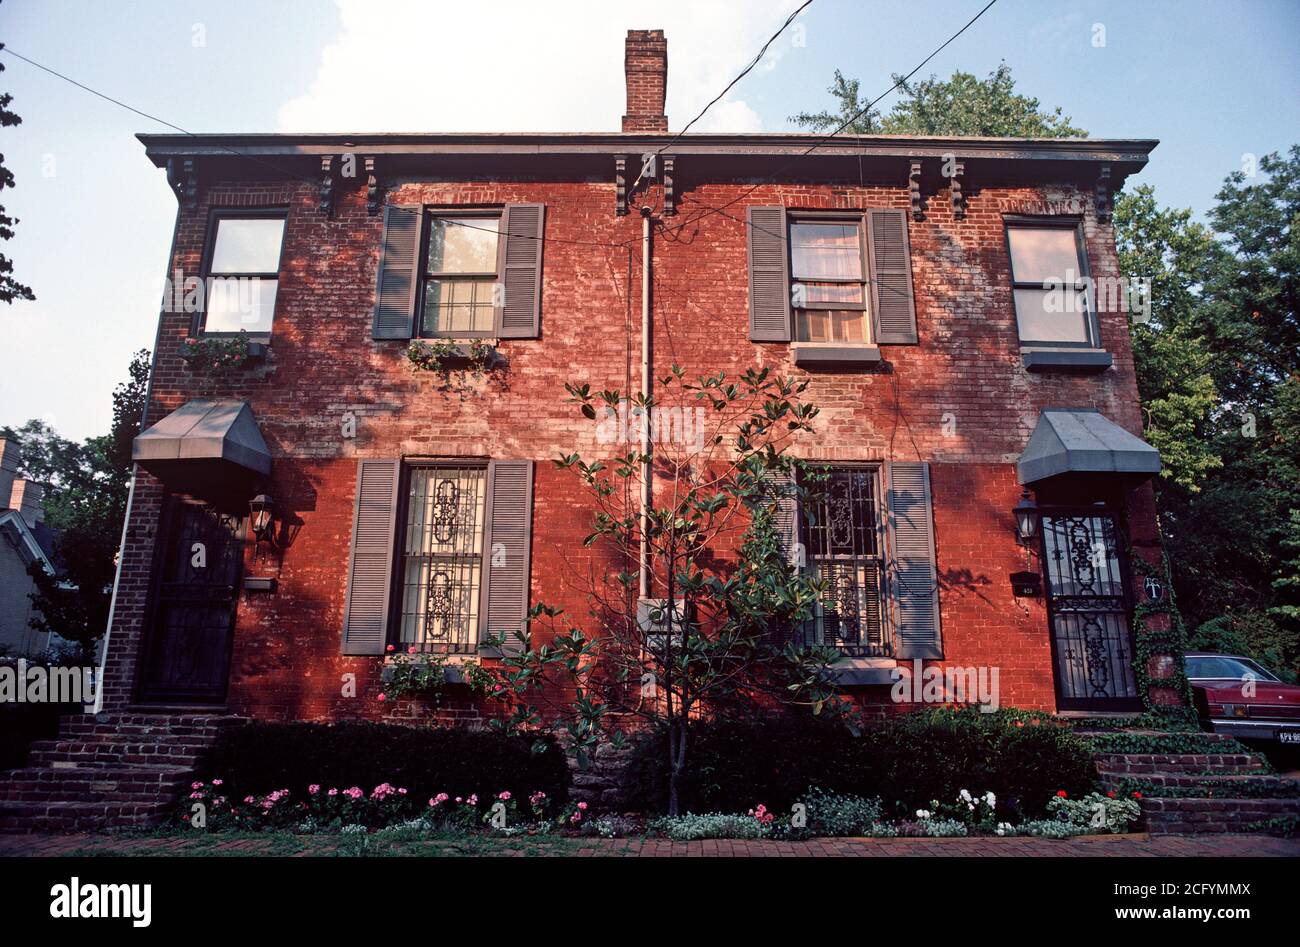 RED BRICK HOUSE IN LEXINGTON, KENTUCKY, USA, 1980s Stock Photo